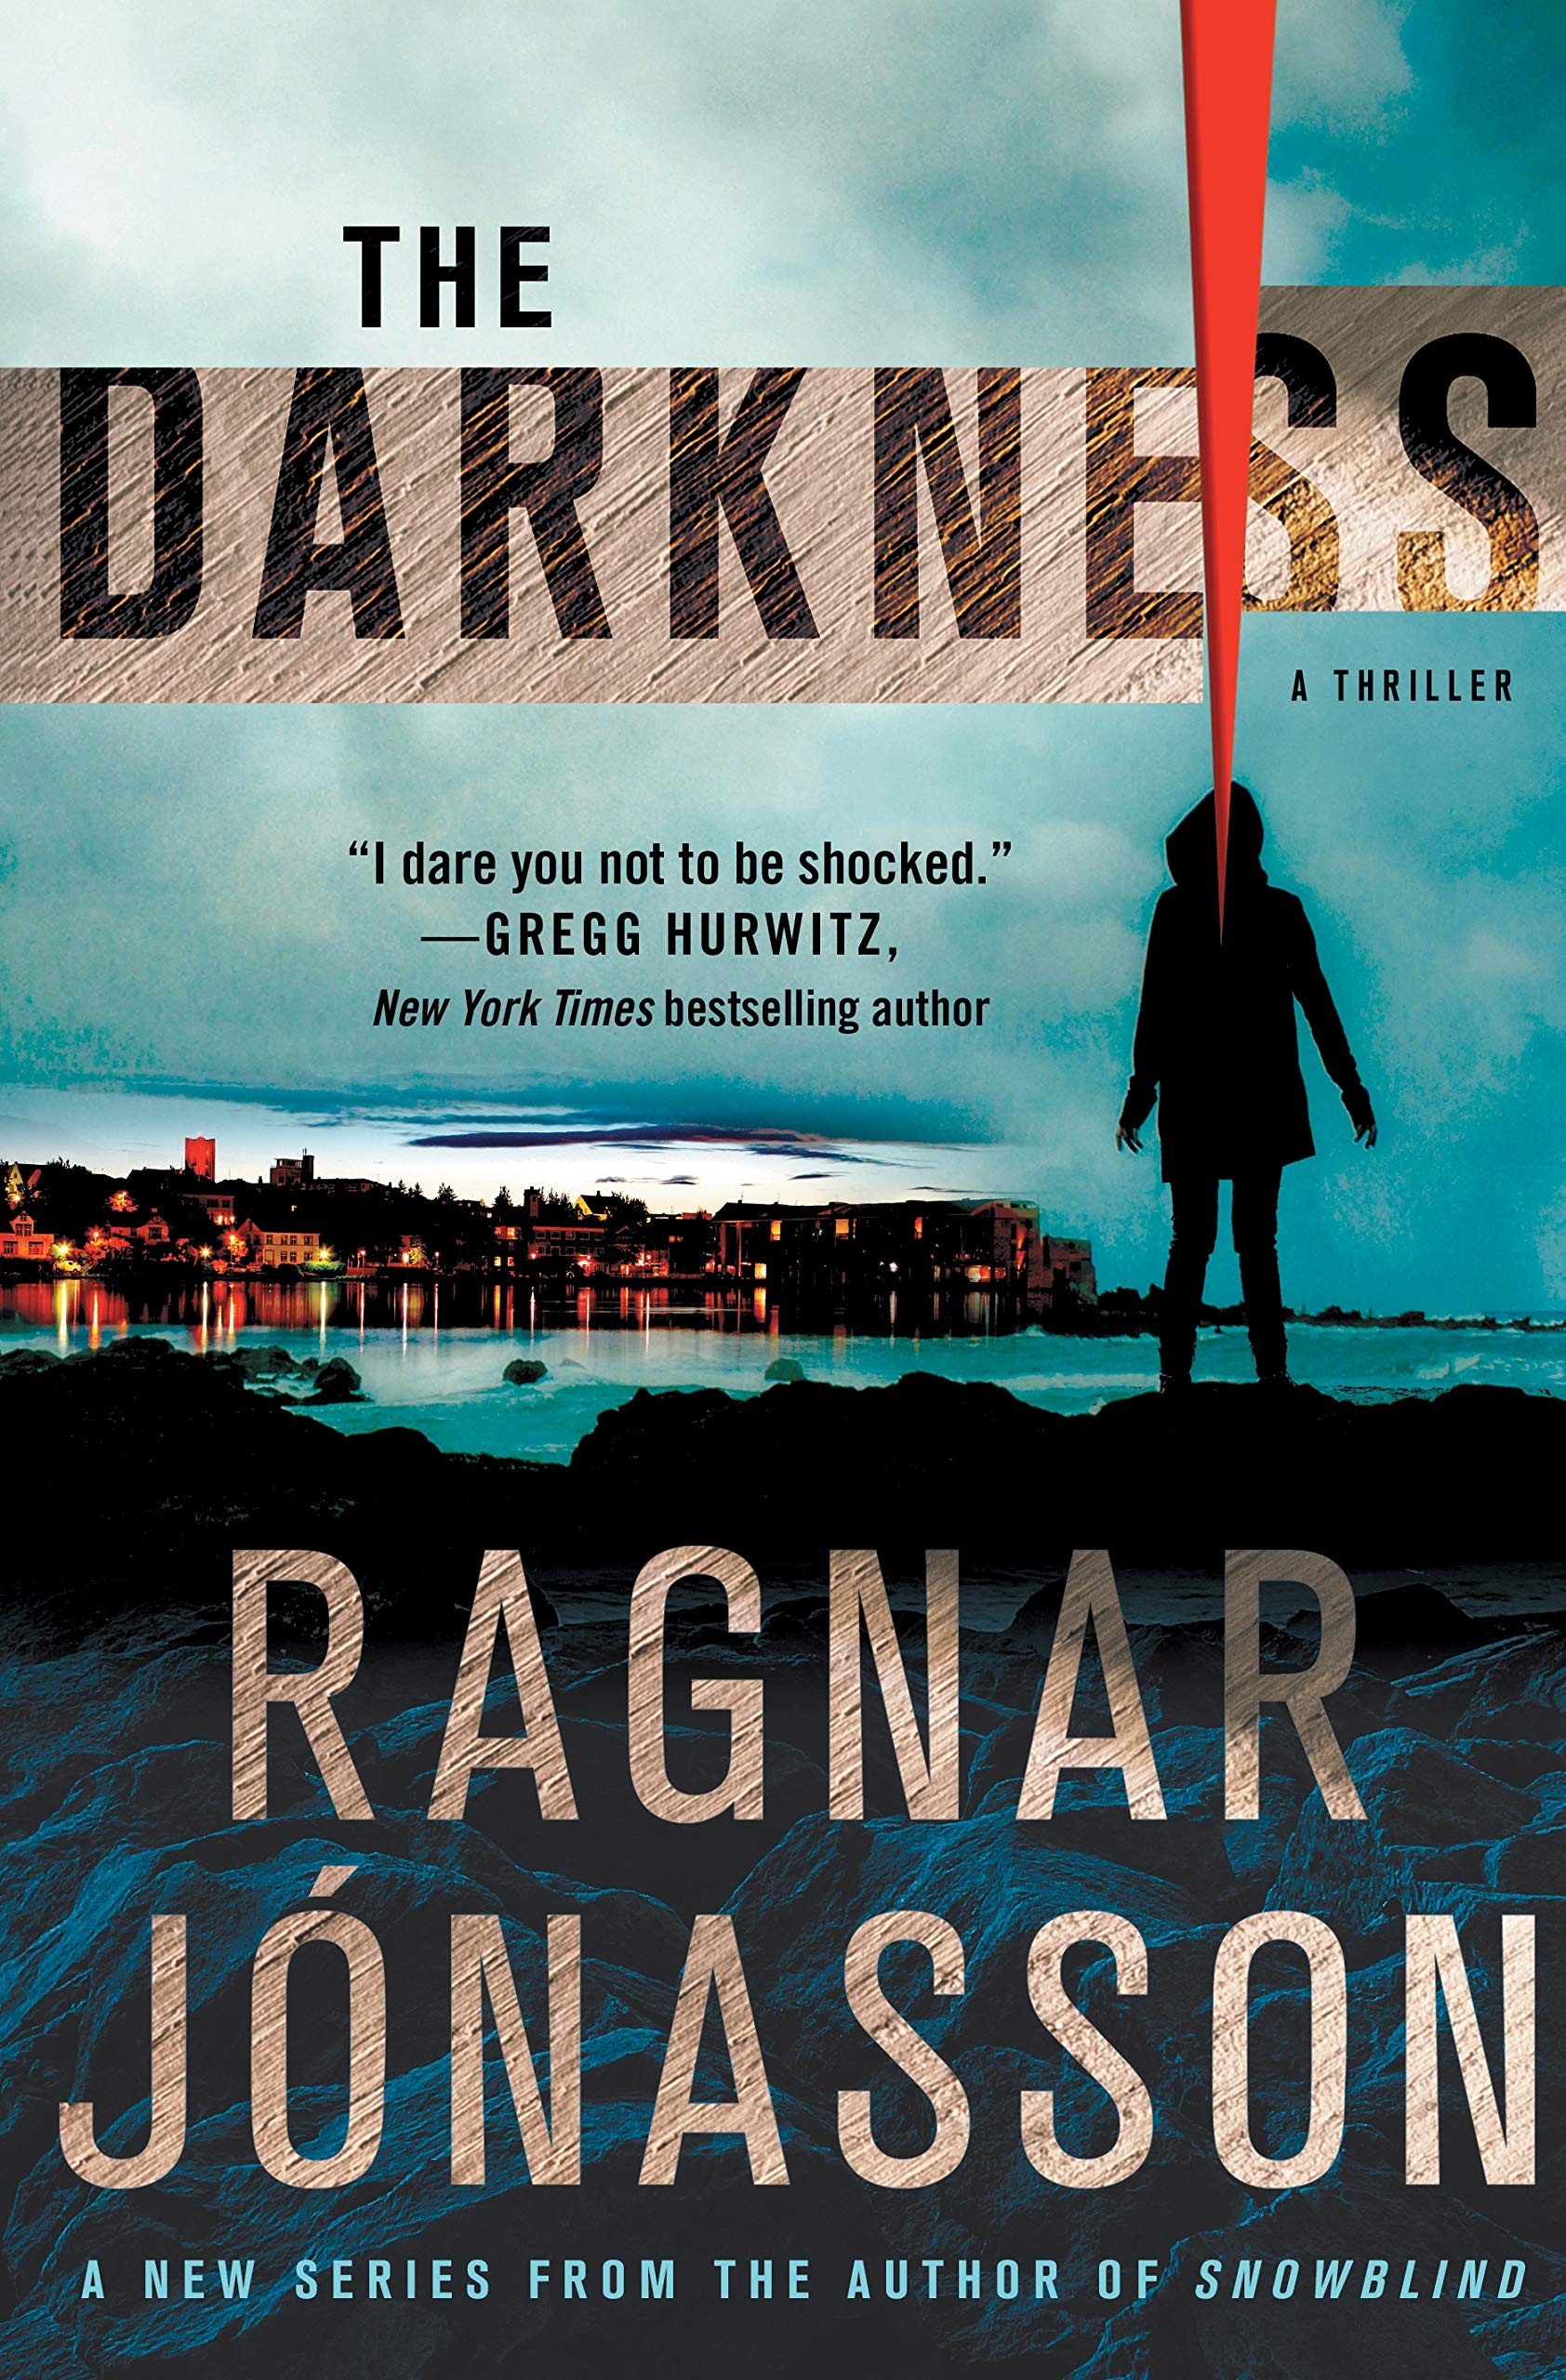 The Darkness Ragnar Jonasson.jpg